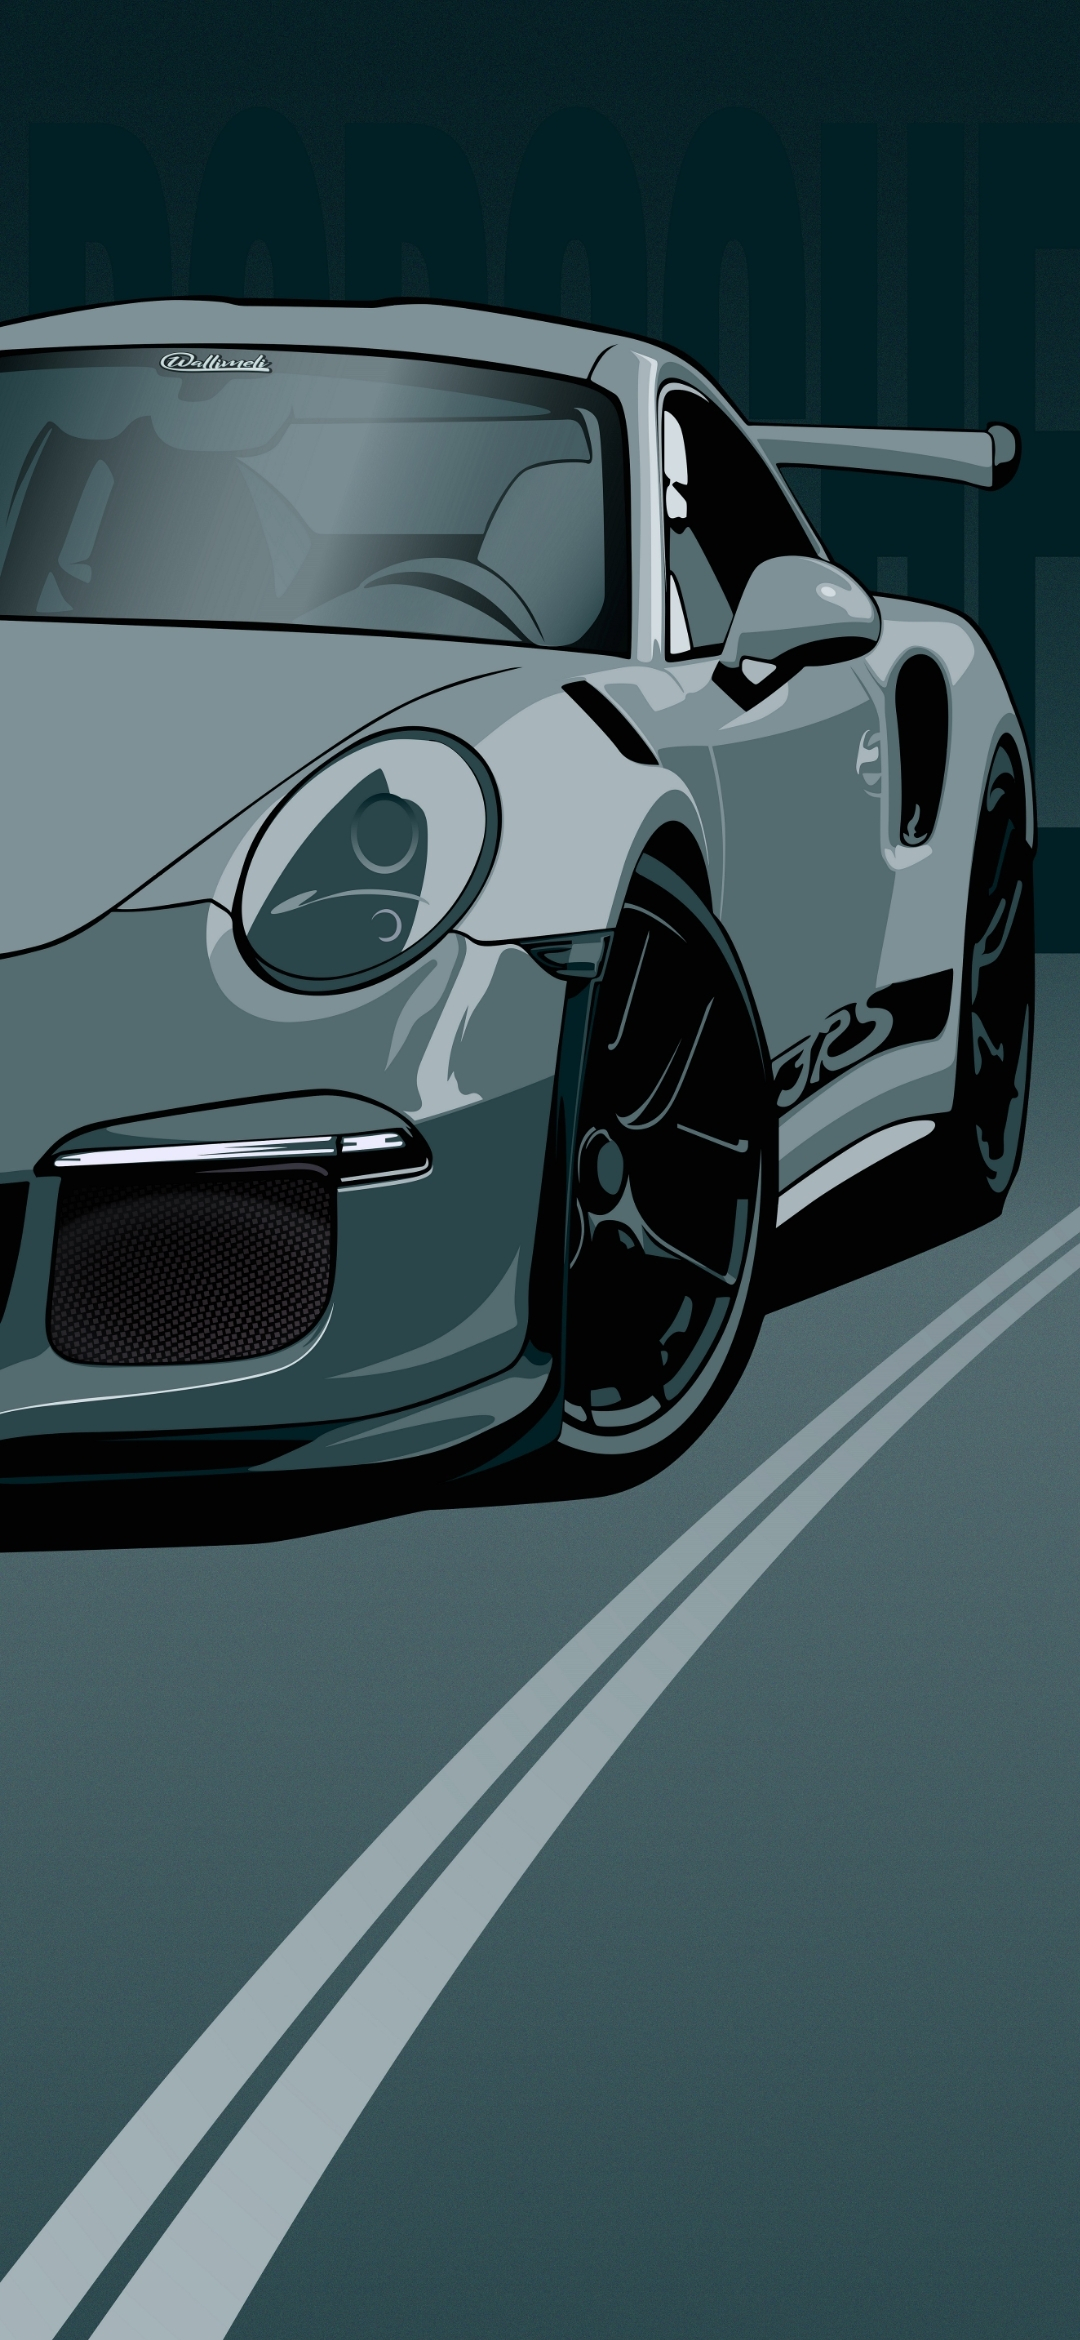 Wallpaper Cars, Sports Car, Porsche, Porsche 911 Gt2, Porsche 911 Gt3,  Background - Download Free Image